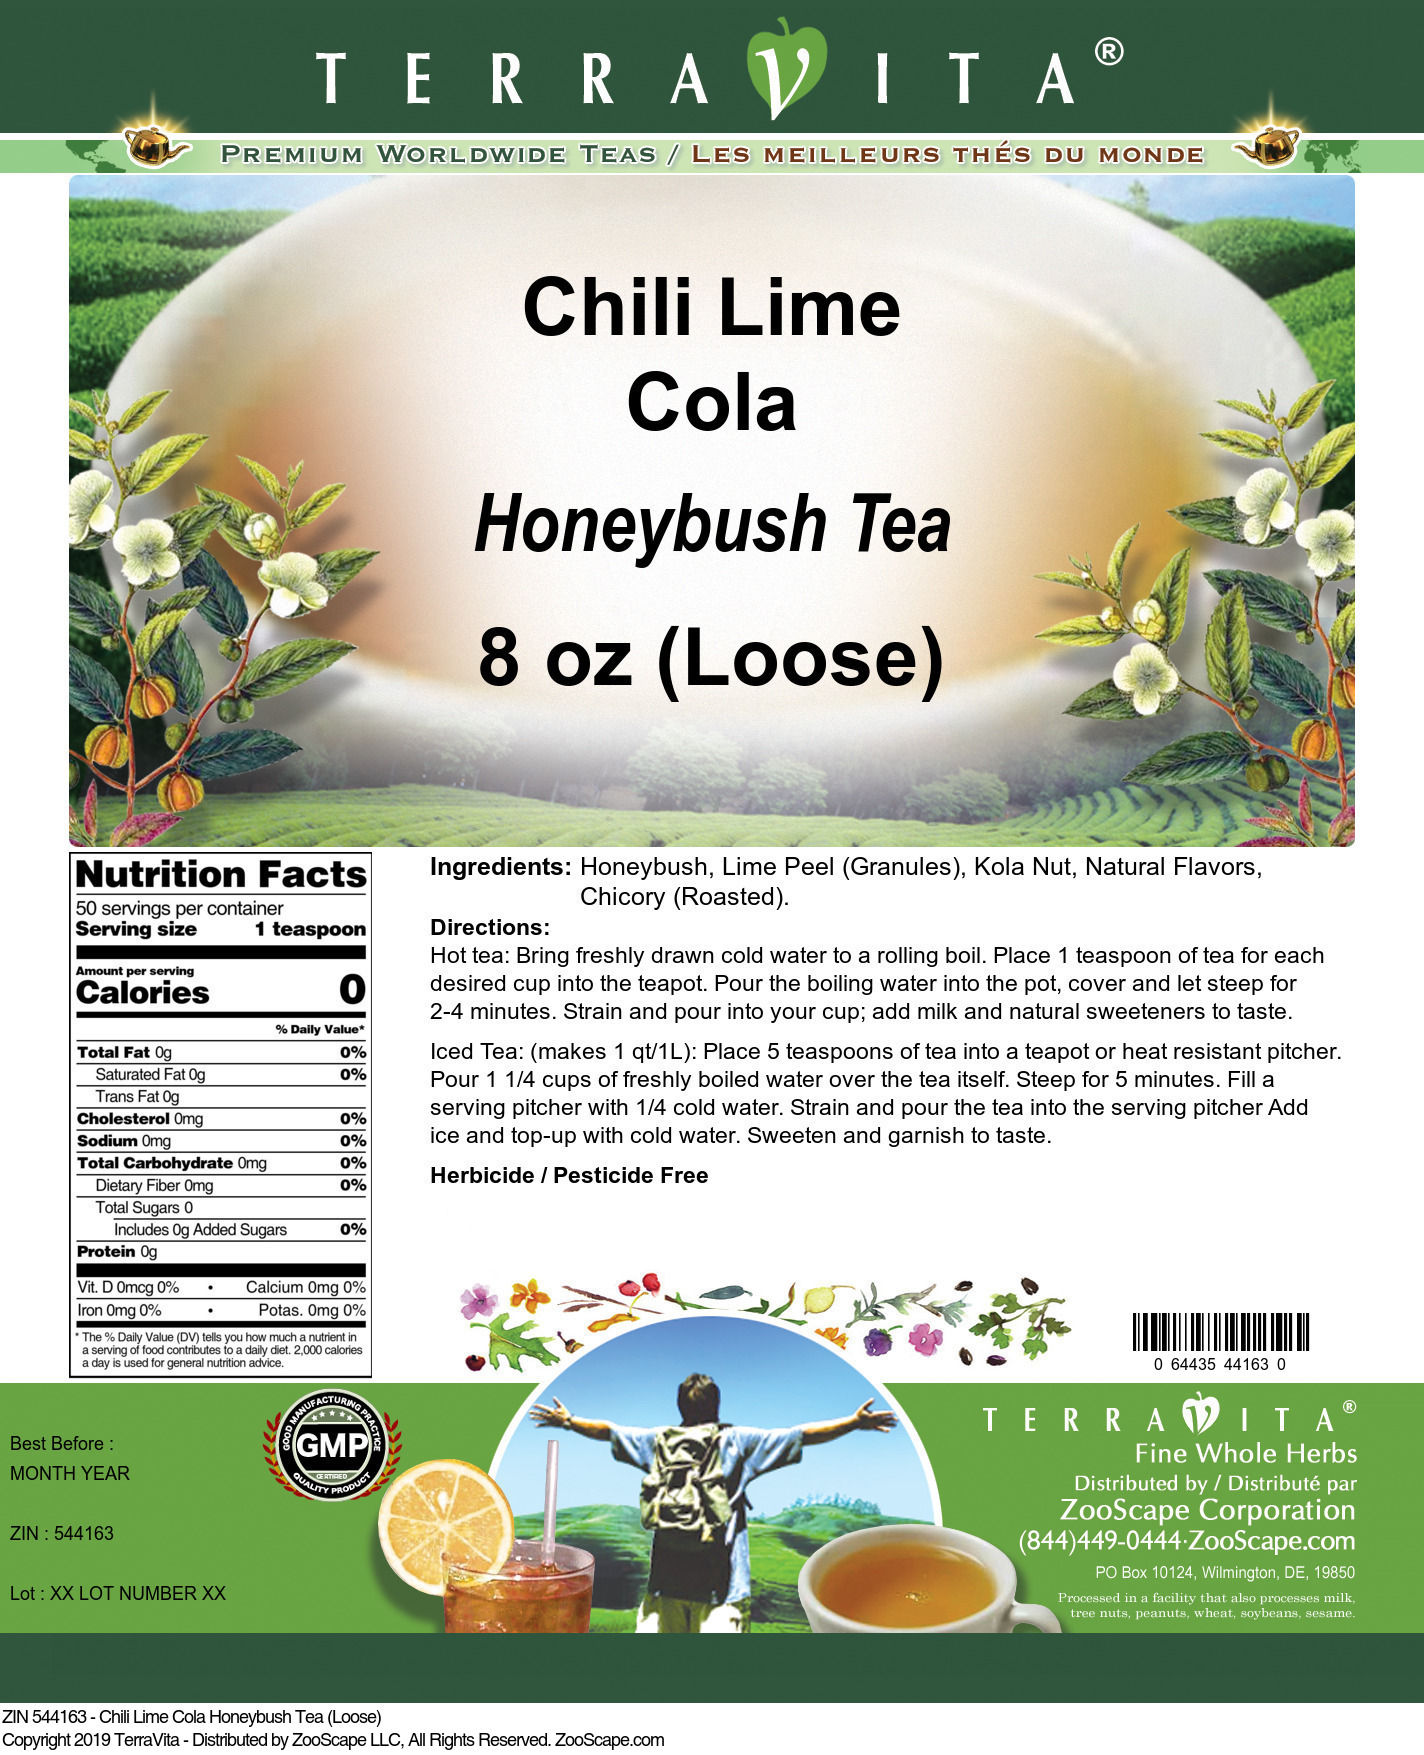 Chili Lime Cola Honeybush Tea (Loose) - Label